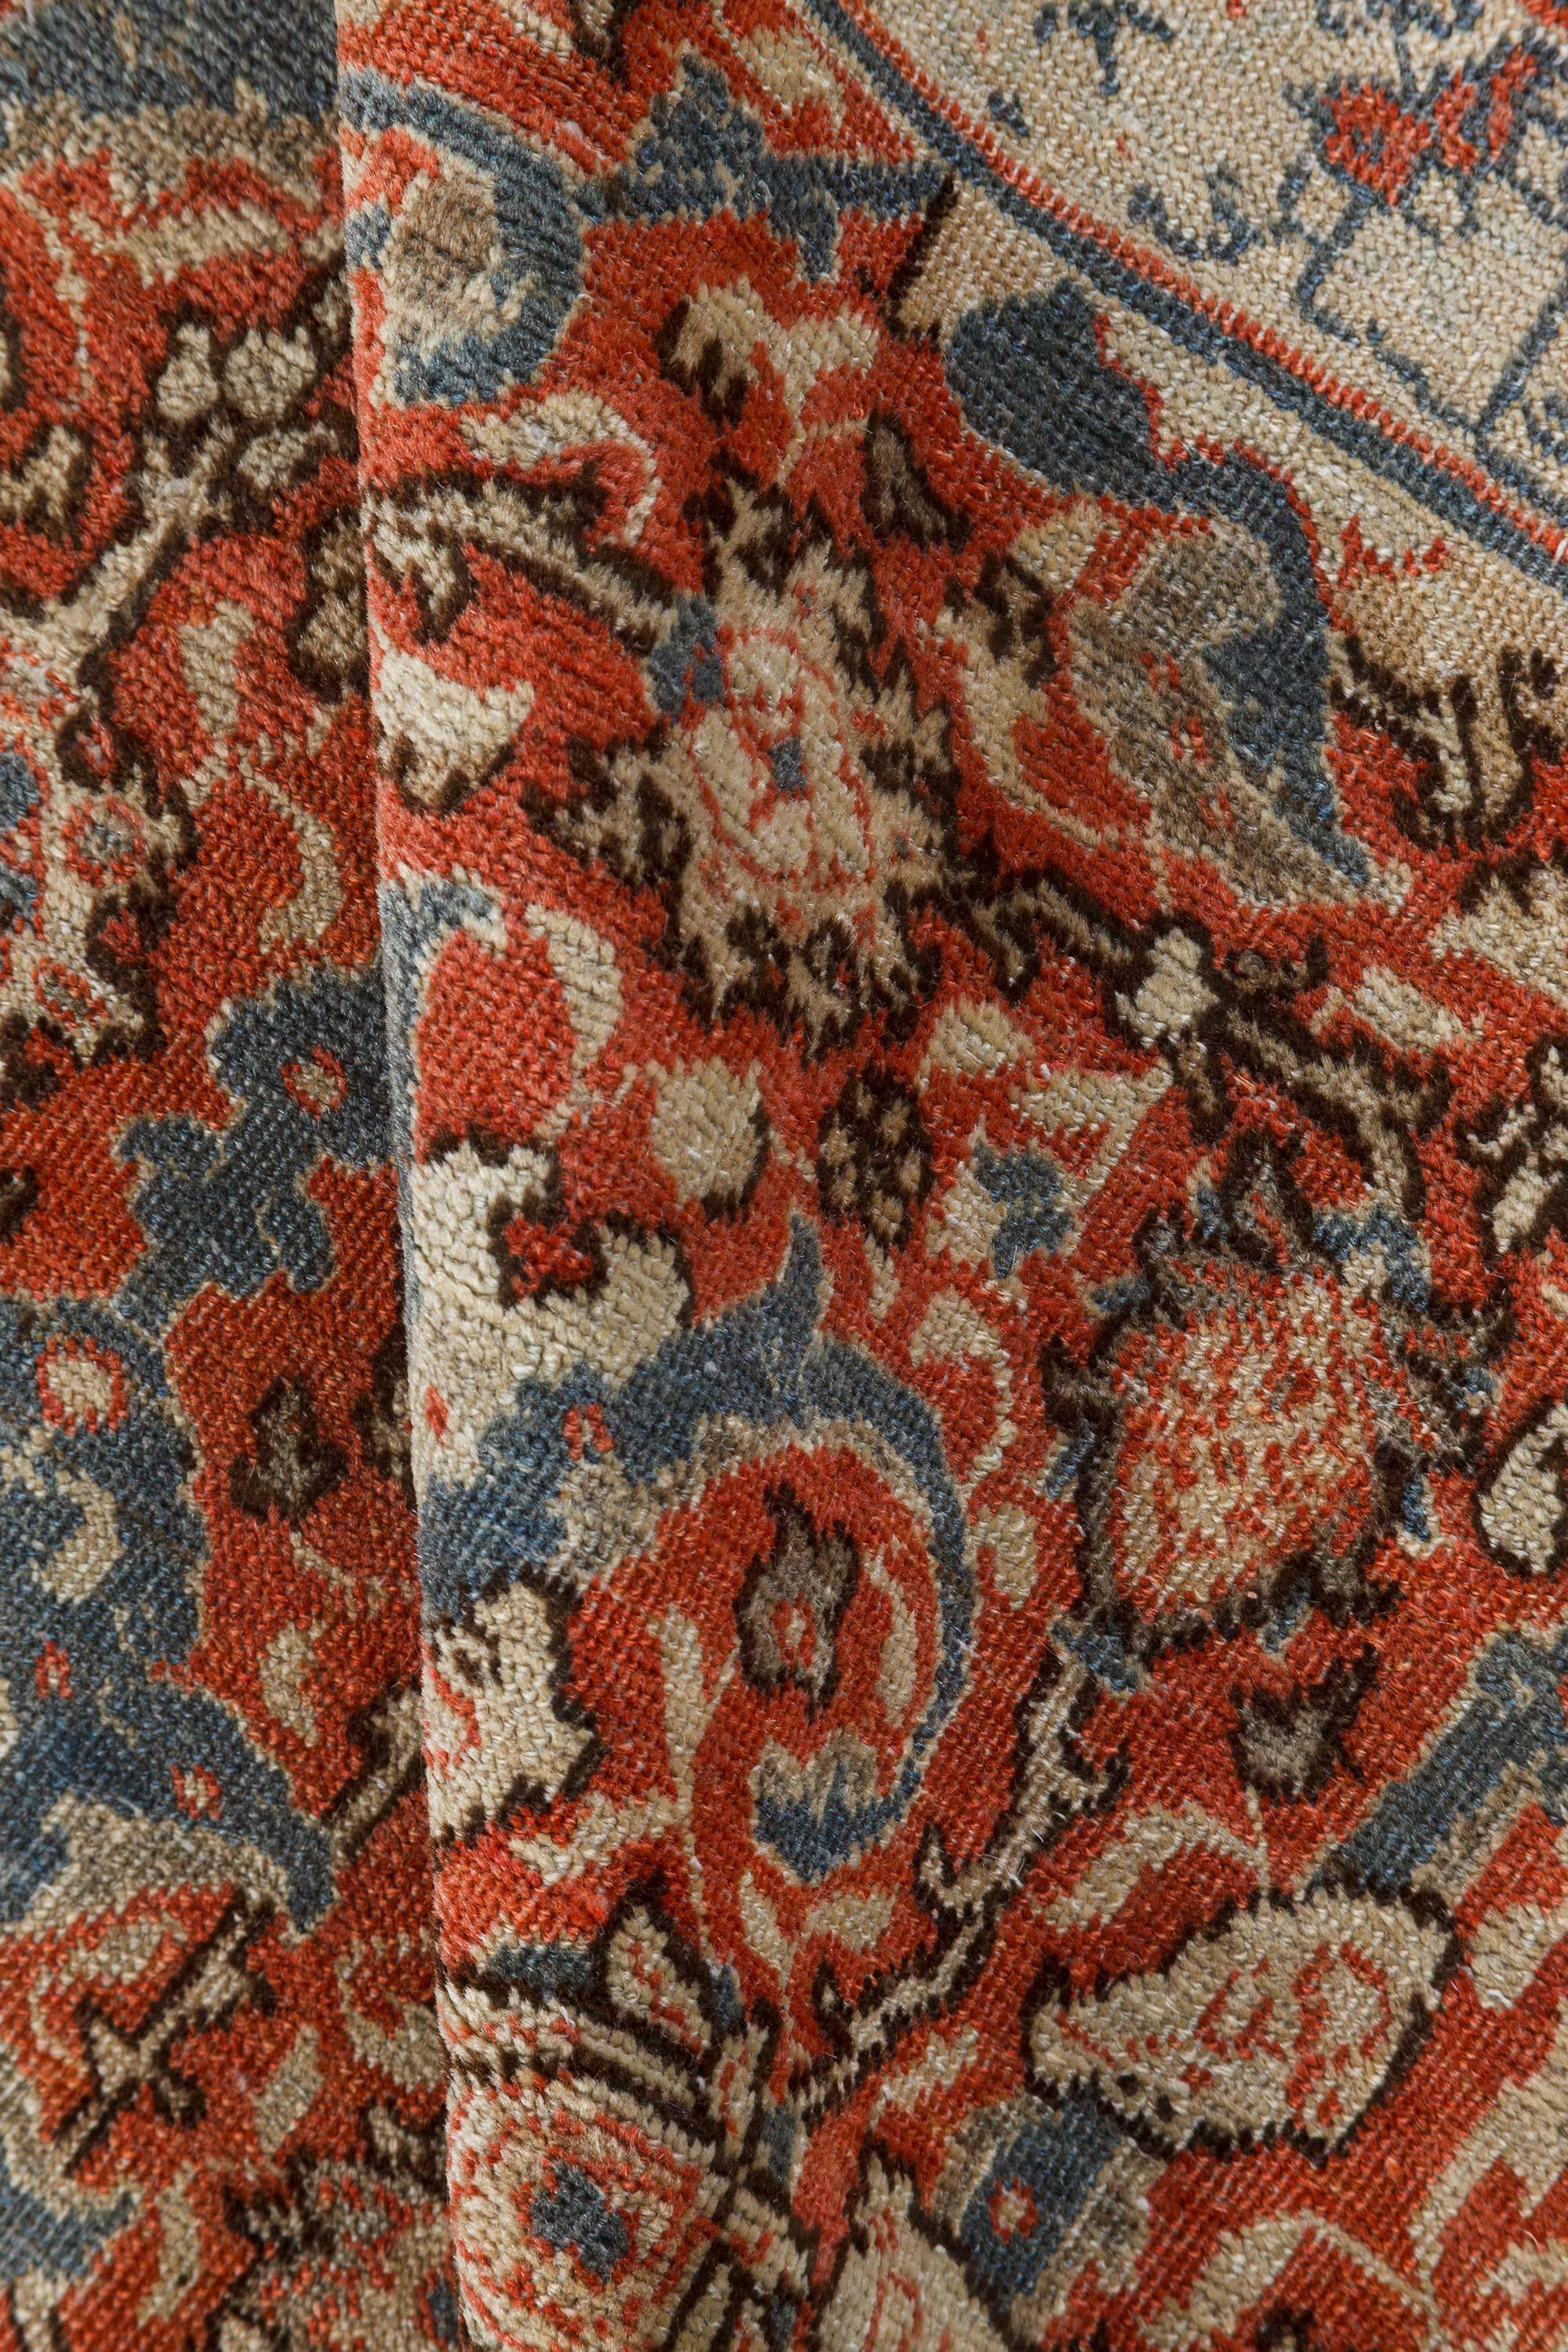 Early 20th century Persian Tabriz red handmade wool rug
Size: 8'8